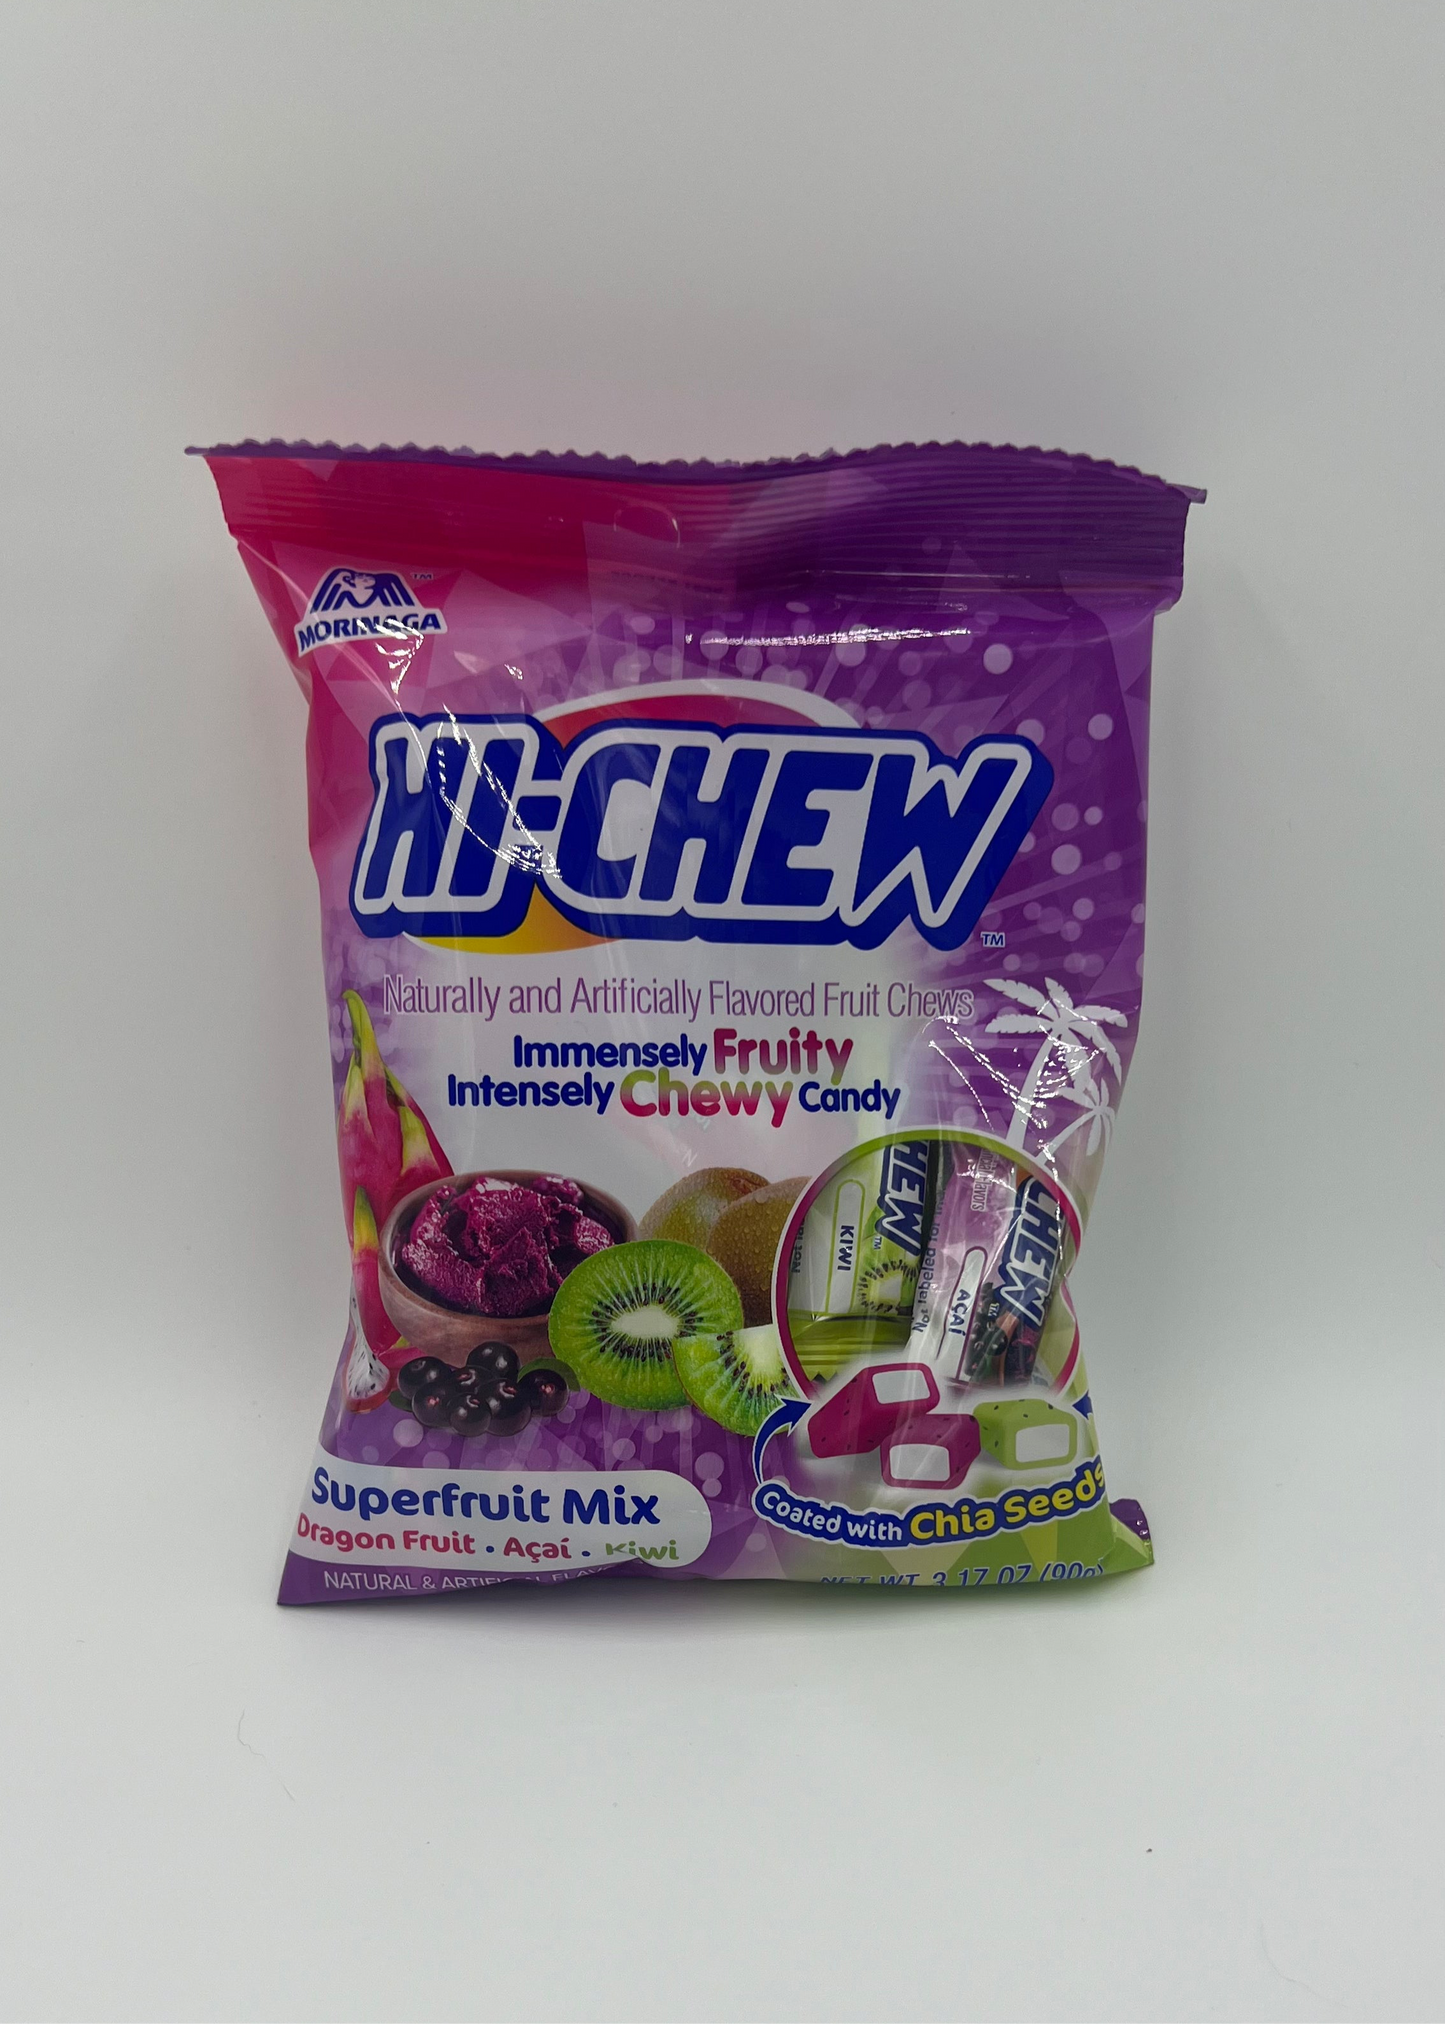 Hi-Chew Superfruit Mix